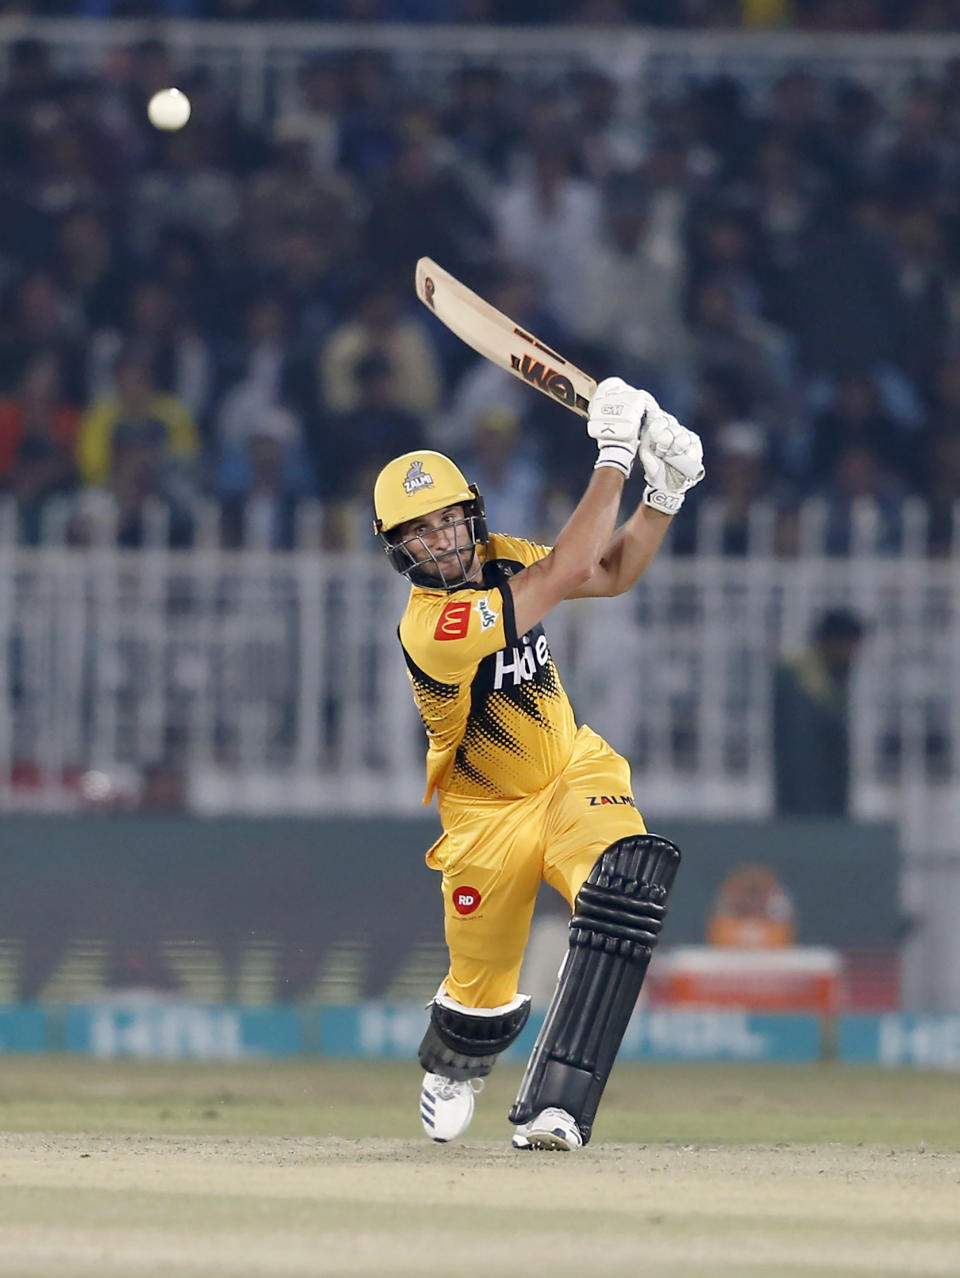 Peshawar Zalmi batsman Liam Livingstone plays a shot for boundary during the Pakistan Super League T20 cricket match against Karachi Kings, in Rawalpindi, Pakistan, Monday, March 2, 2020. (AP Photo/Anjum Naveed)